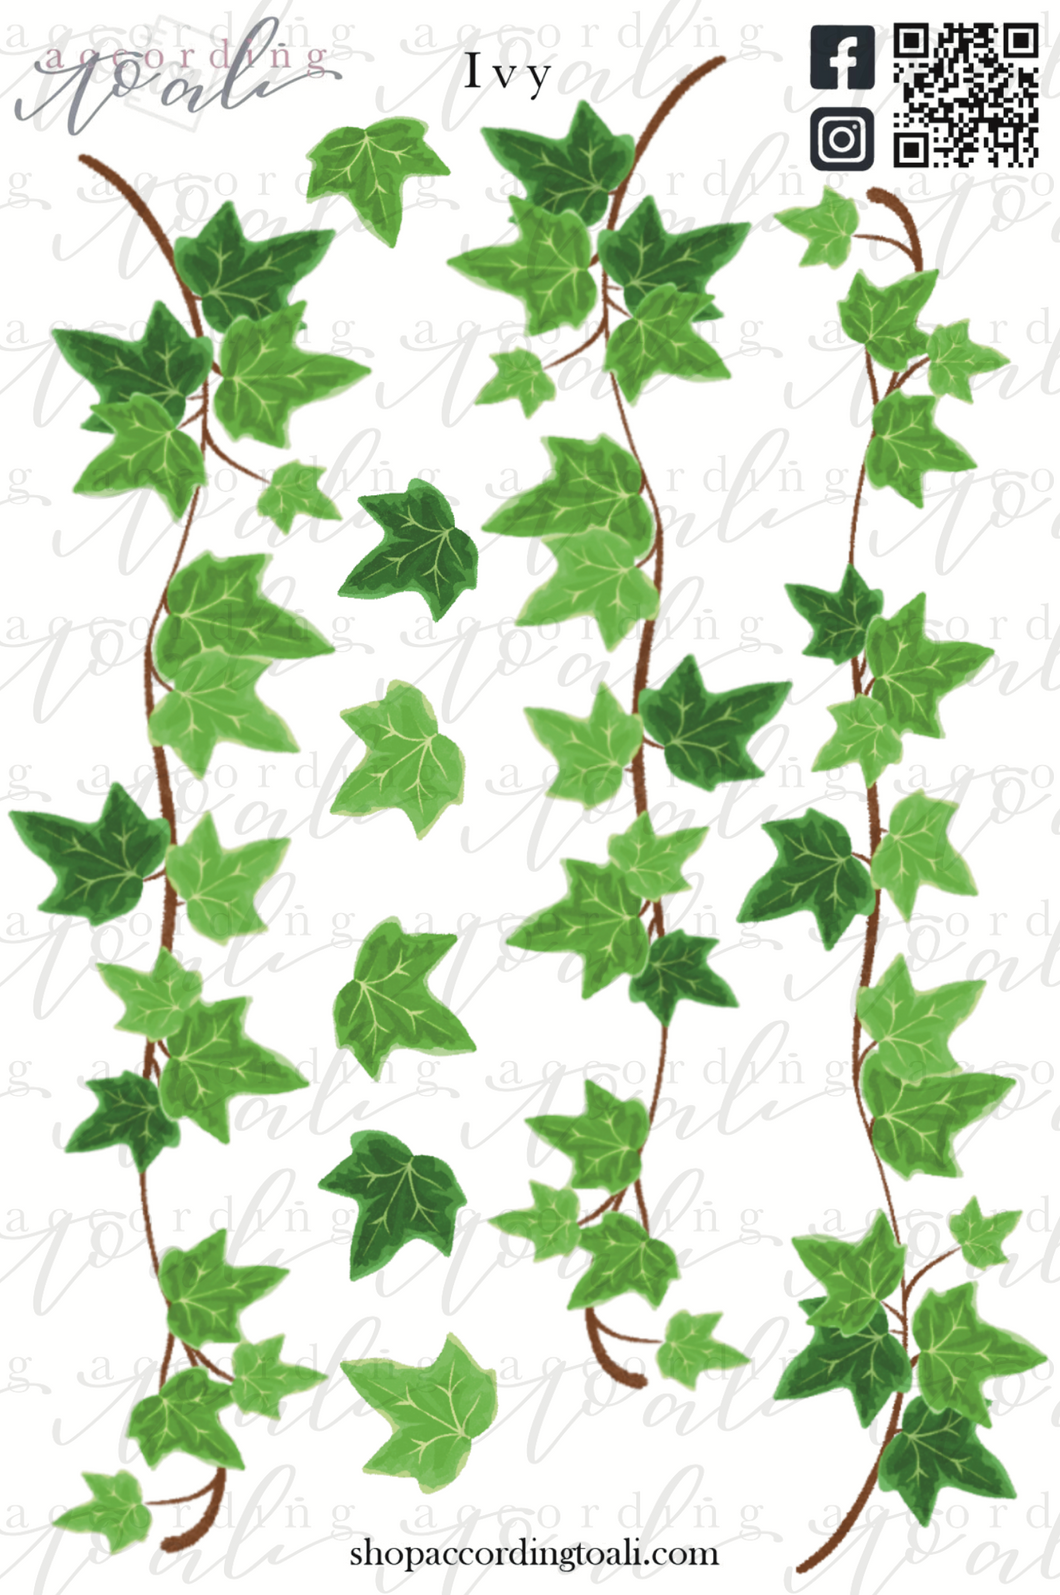 Ivy Sticker Sheet